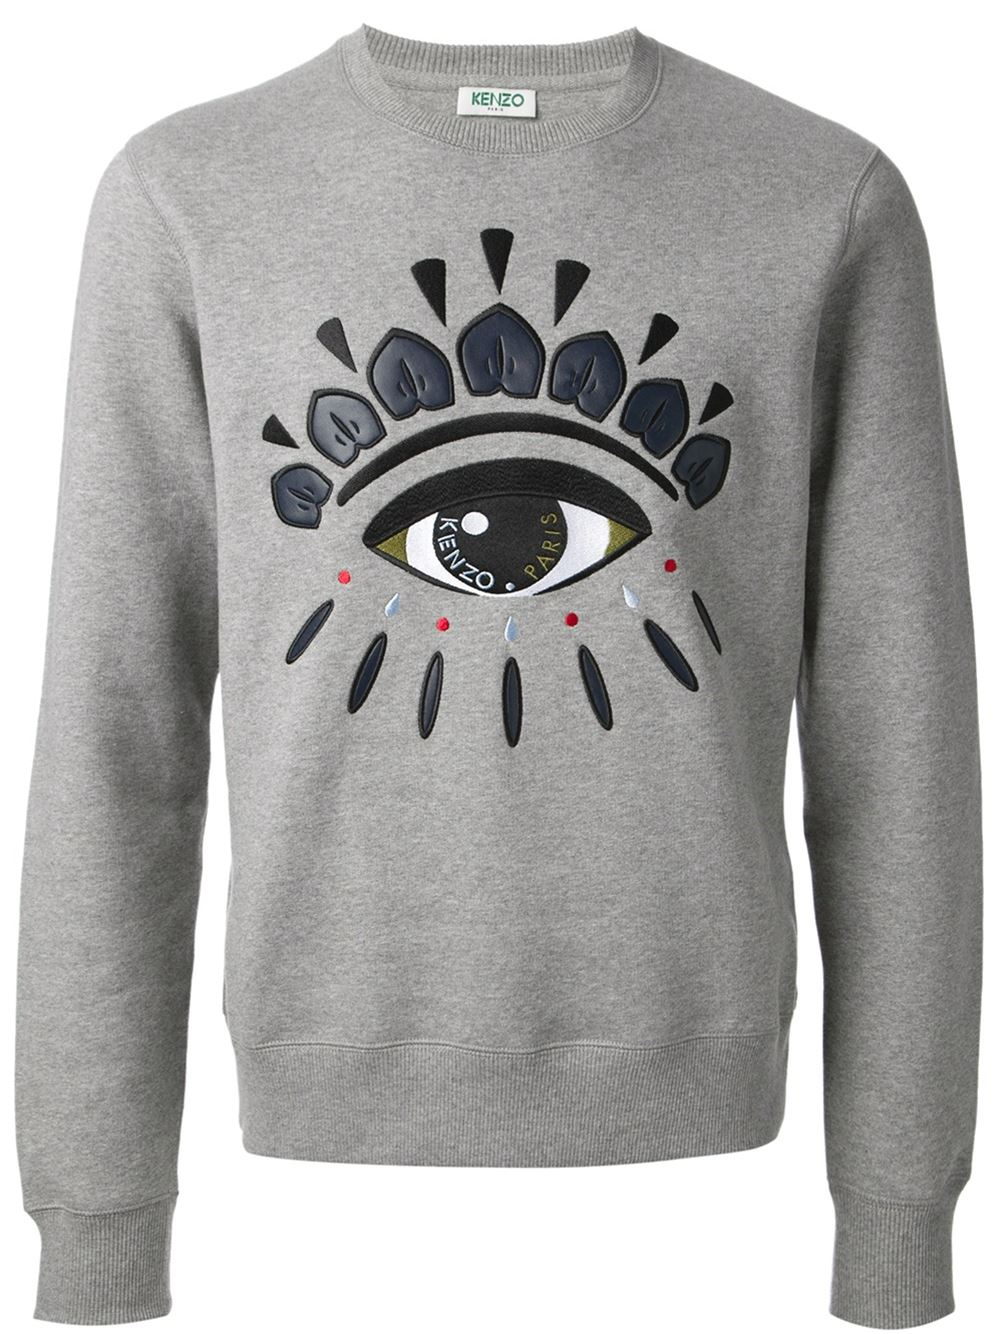 Lyst - Kenzo Embroidered Eye Sweatshirt in Gray for Men